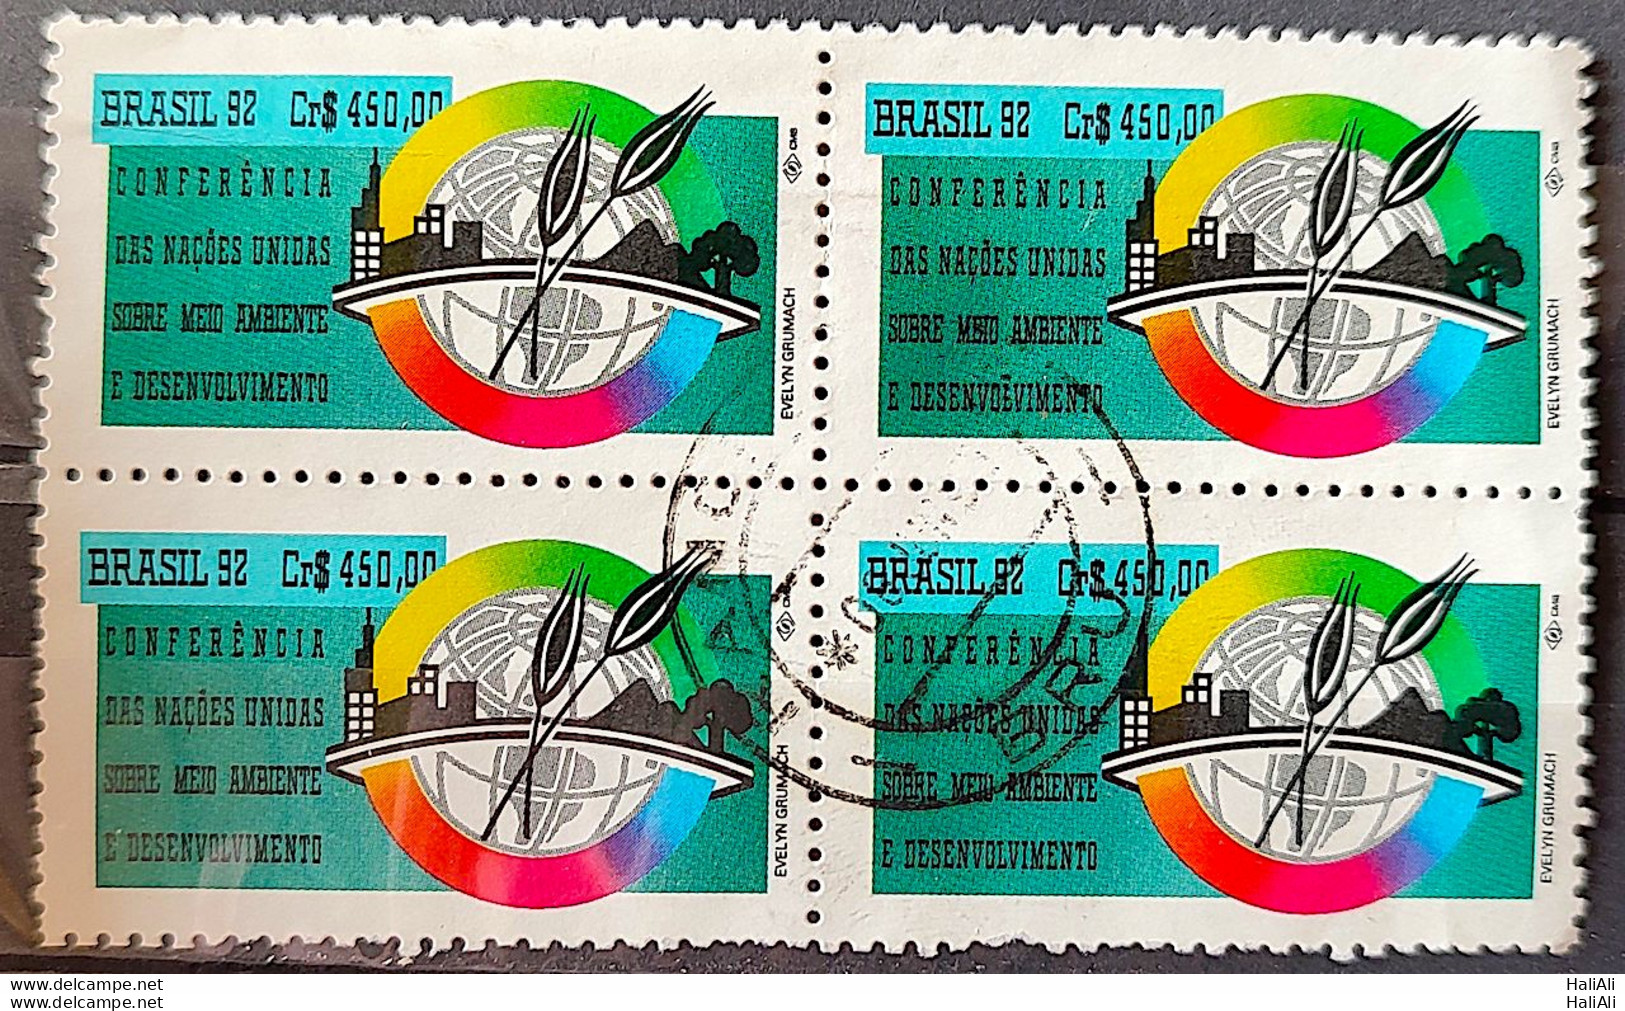 C 1799 Brazil Stamp Conference Eco 92 Rio De Janeiro Environment 1992 Block Of 4 Circulated 1 - Usati